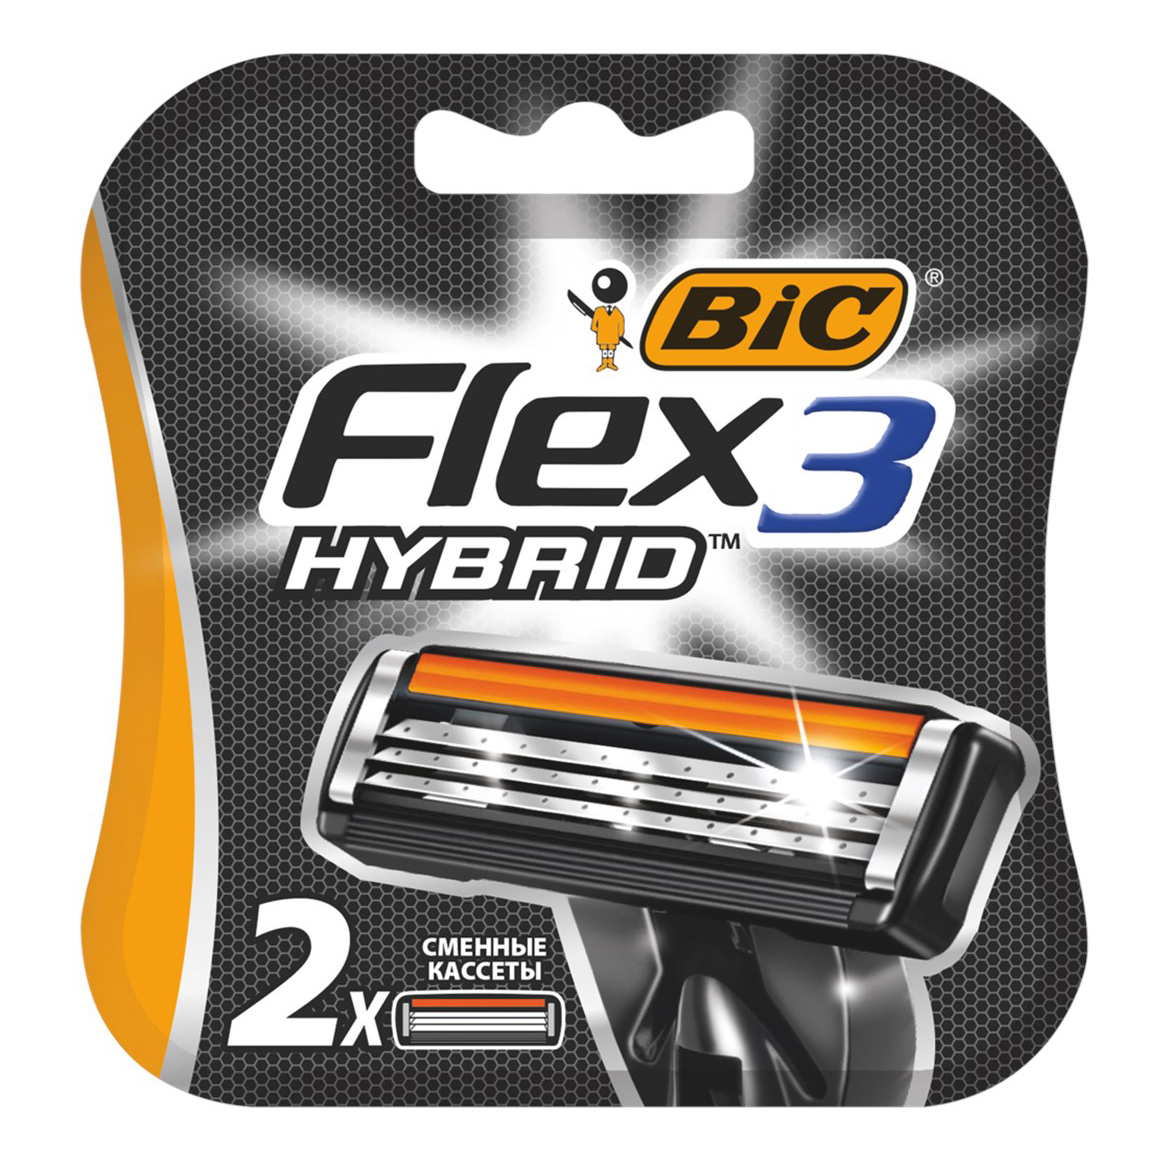 Сменная кассета Bic Flex 3 Hybrid 3 лезвия 2 шт открытка брат кассета vhs